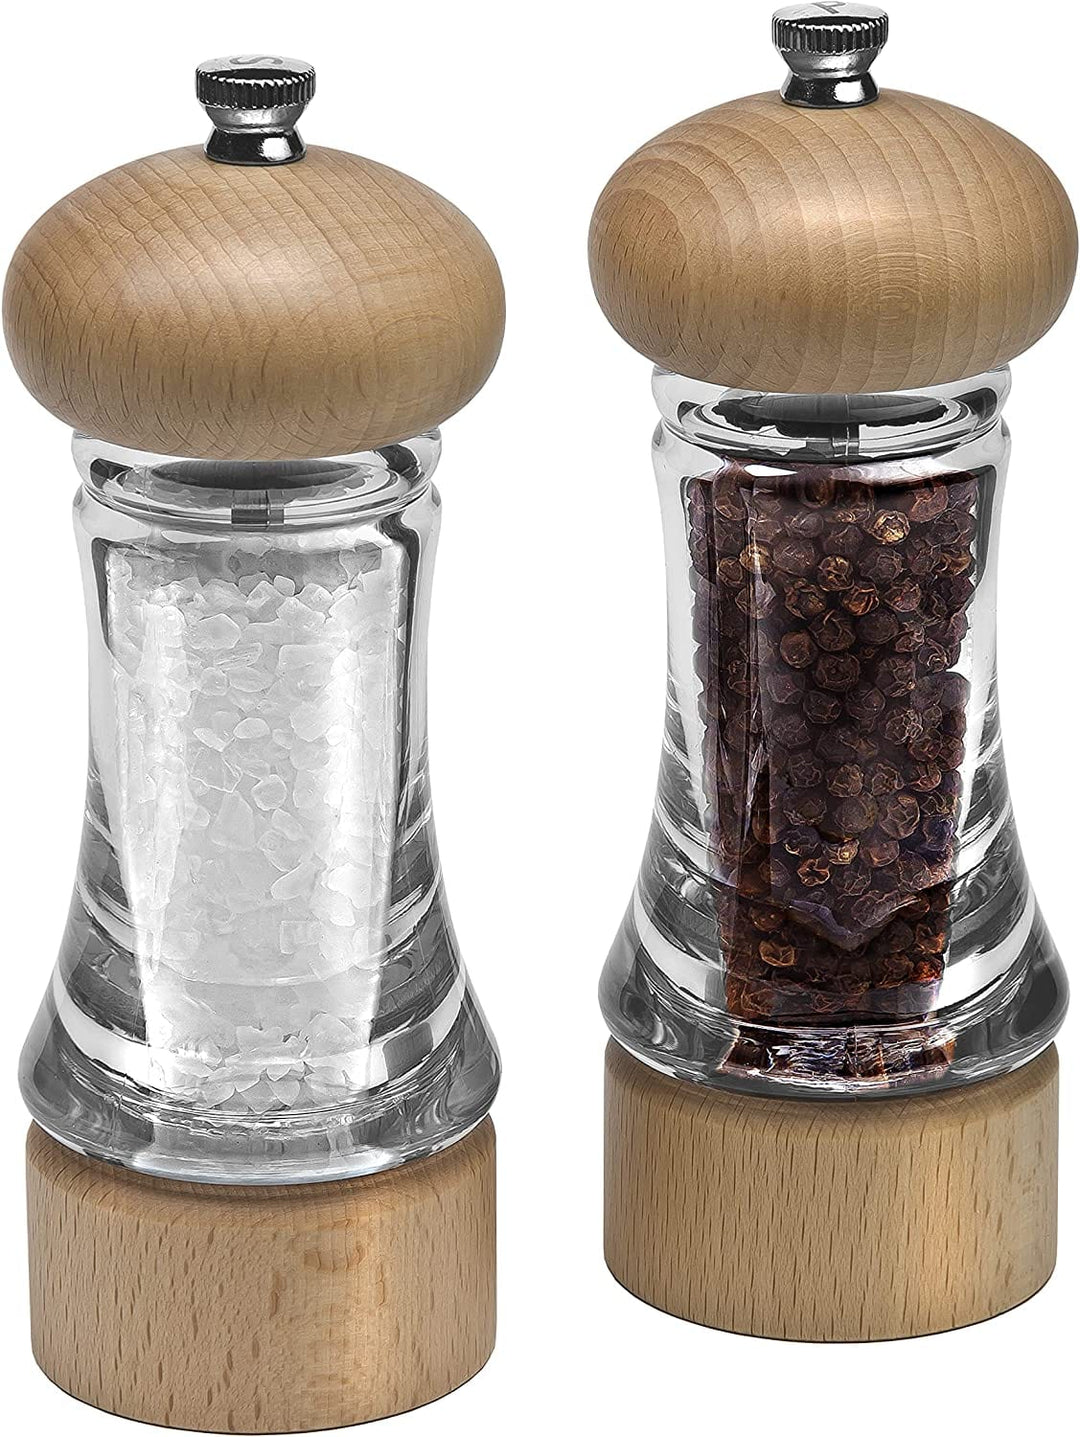 Wooden Salt Shaker Pepper Mill Spice Grinder Set Country Kitchen